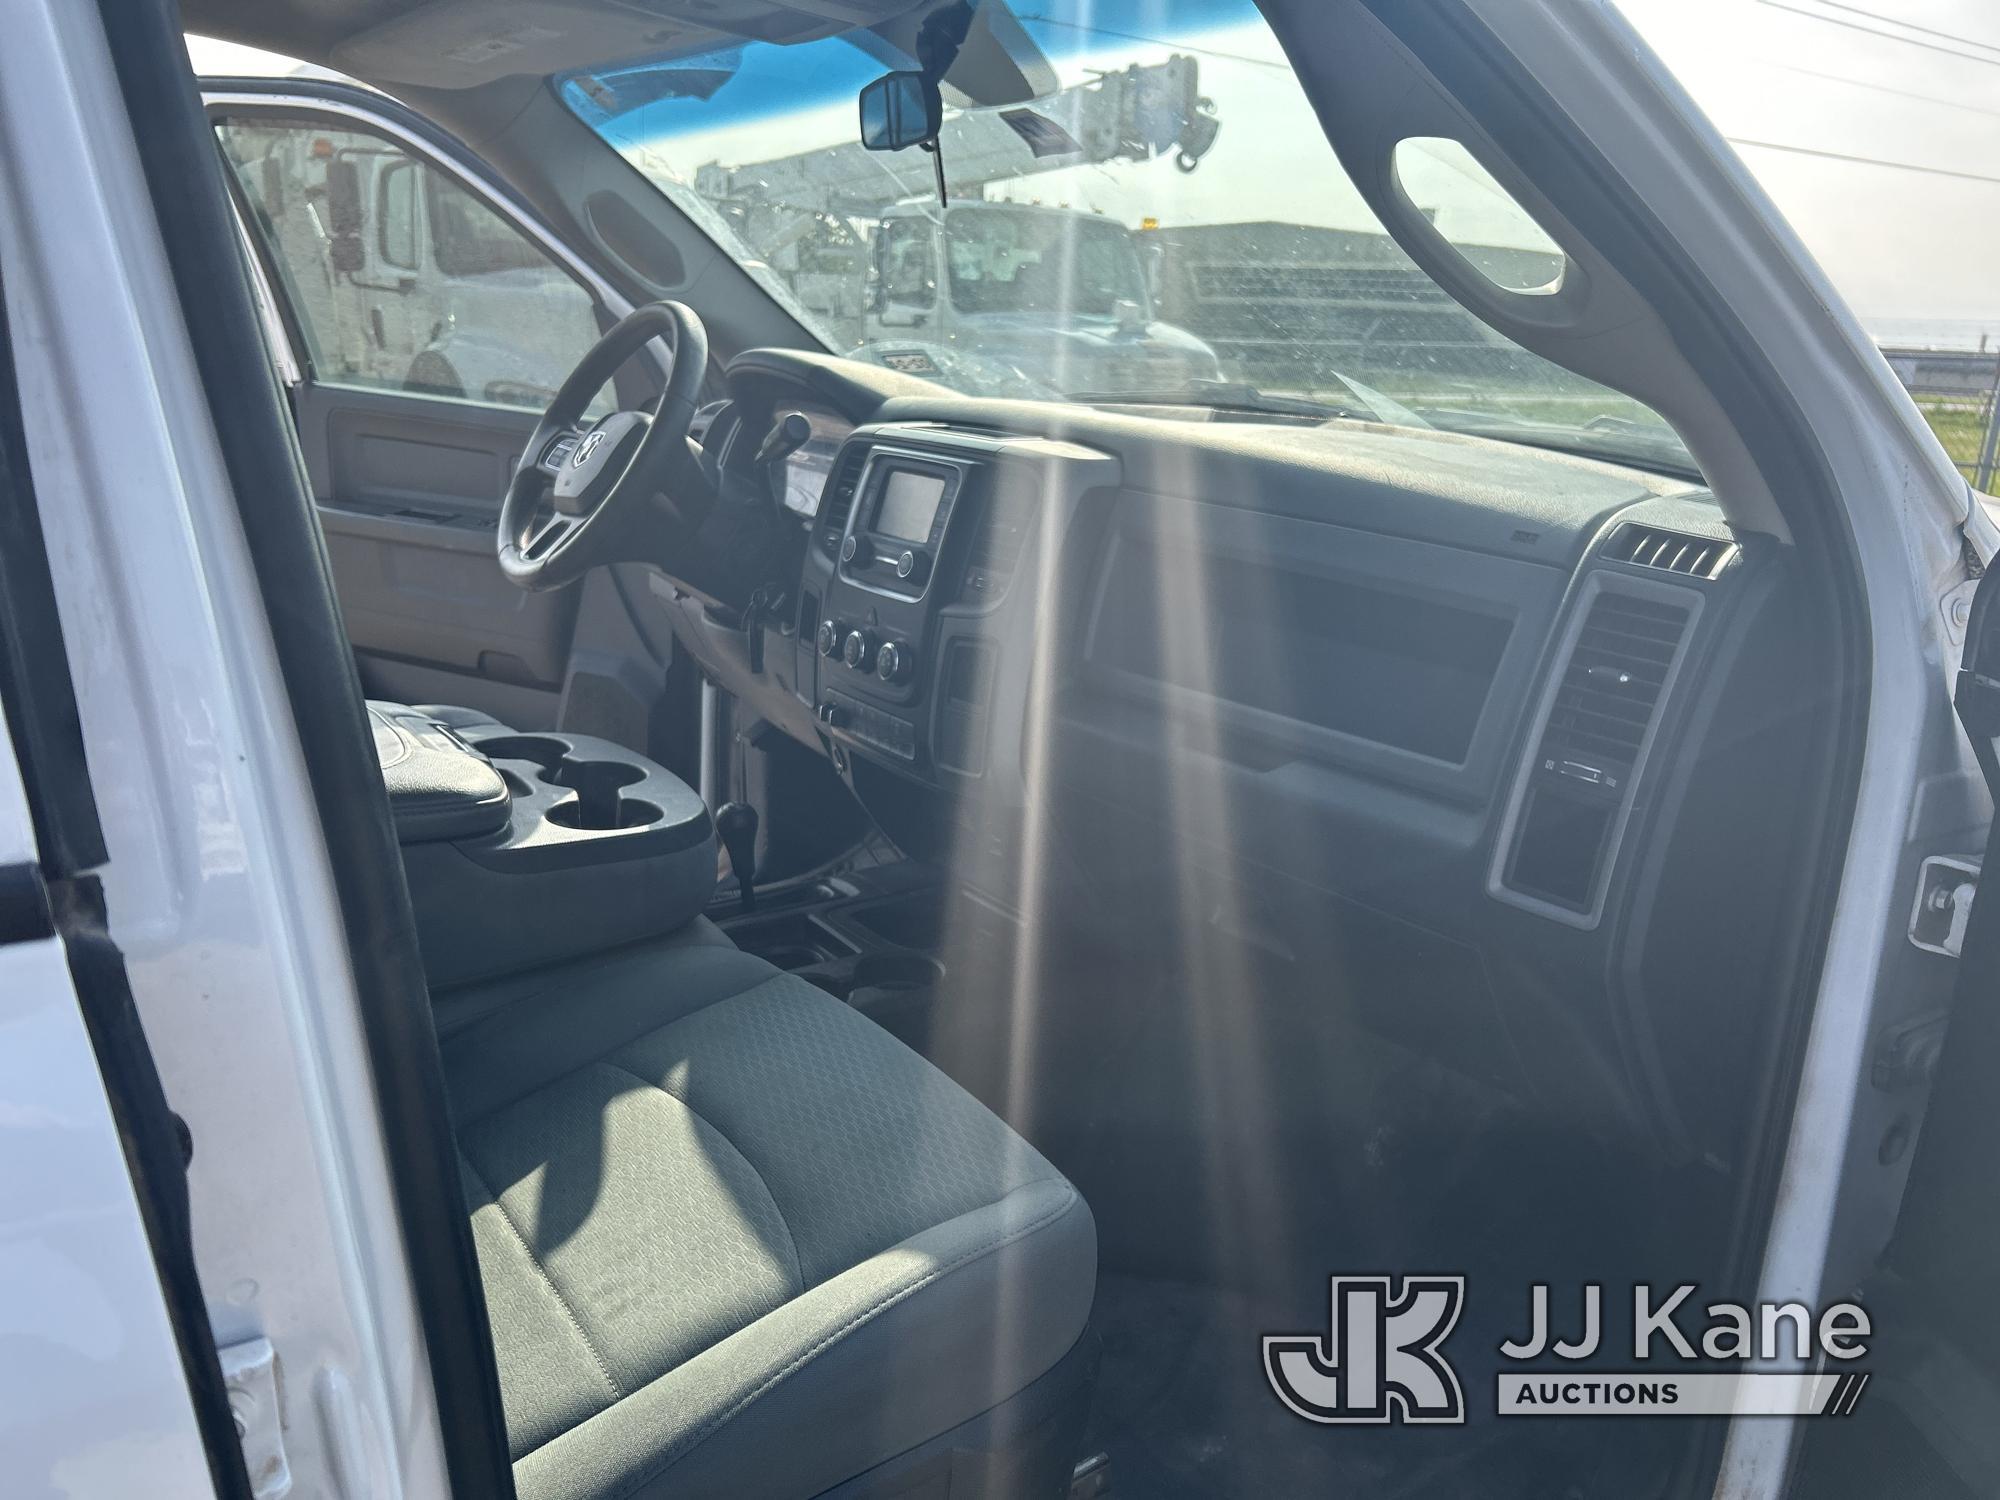 (Waxahachie, TX) 2018 Dodge RAM 2500 4x4 Crew-Cab Pickup Truck Runs & Moves, Jump To Start) (Tire Pr